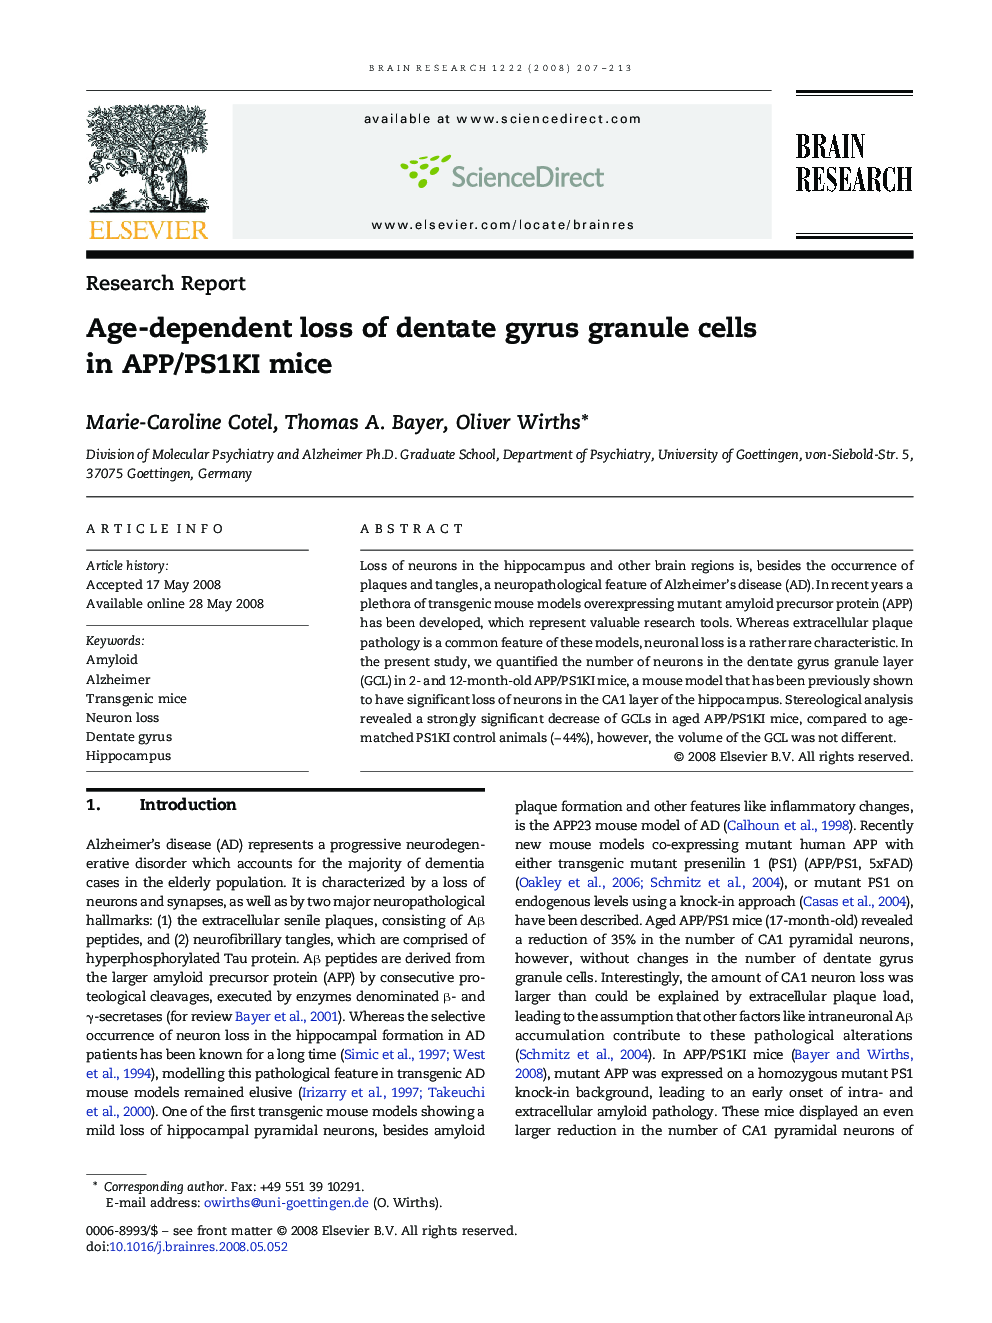 Age-dependent loss of dentate gyrus granule cells in APP/PS1KI mice